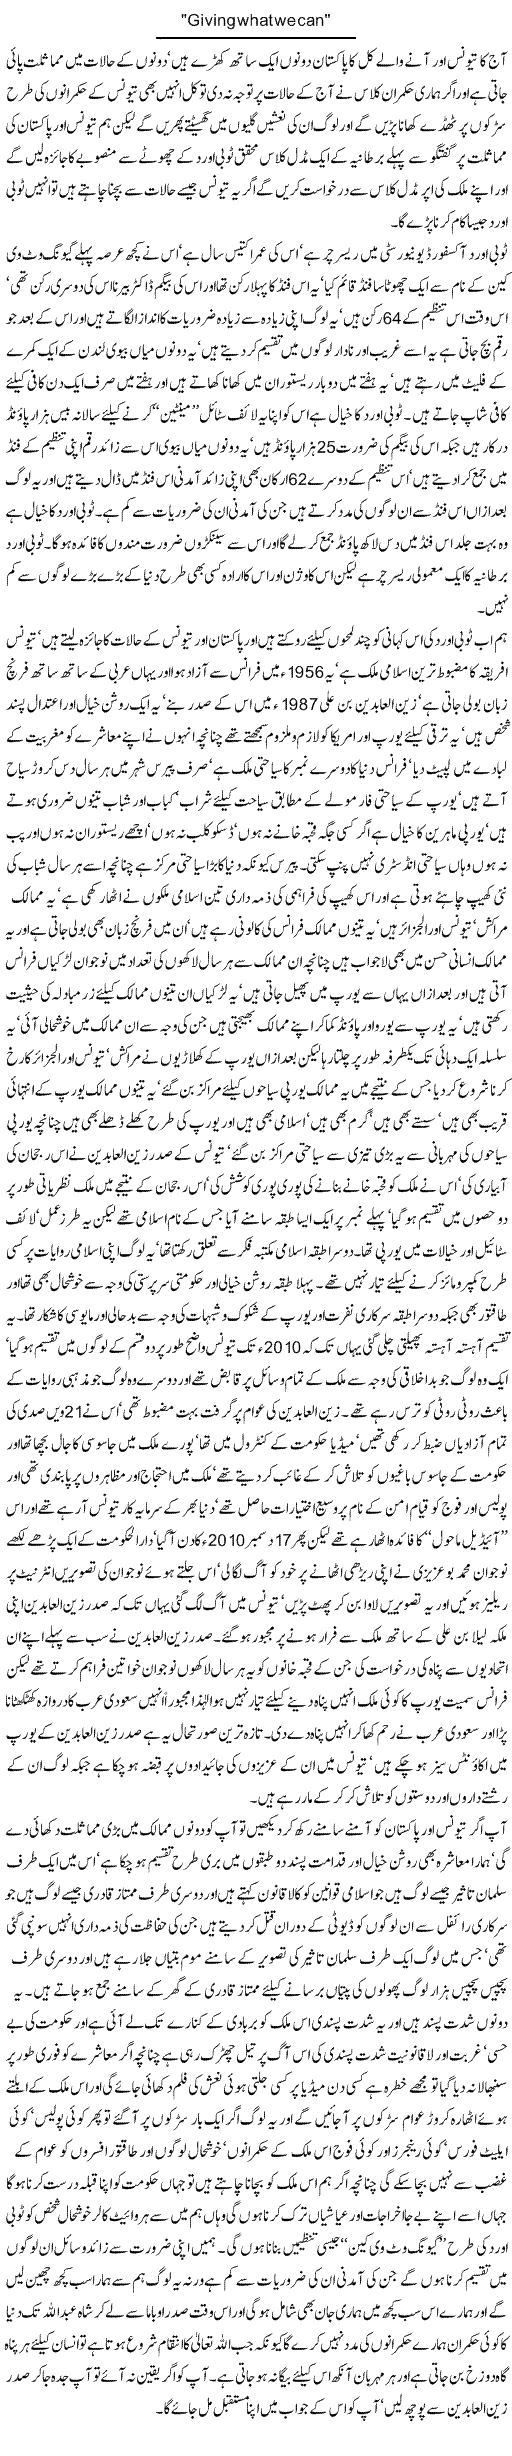 Tunisia and Pakistan Express Column Javed Chaudhry 20 January 2011